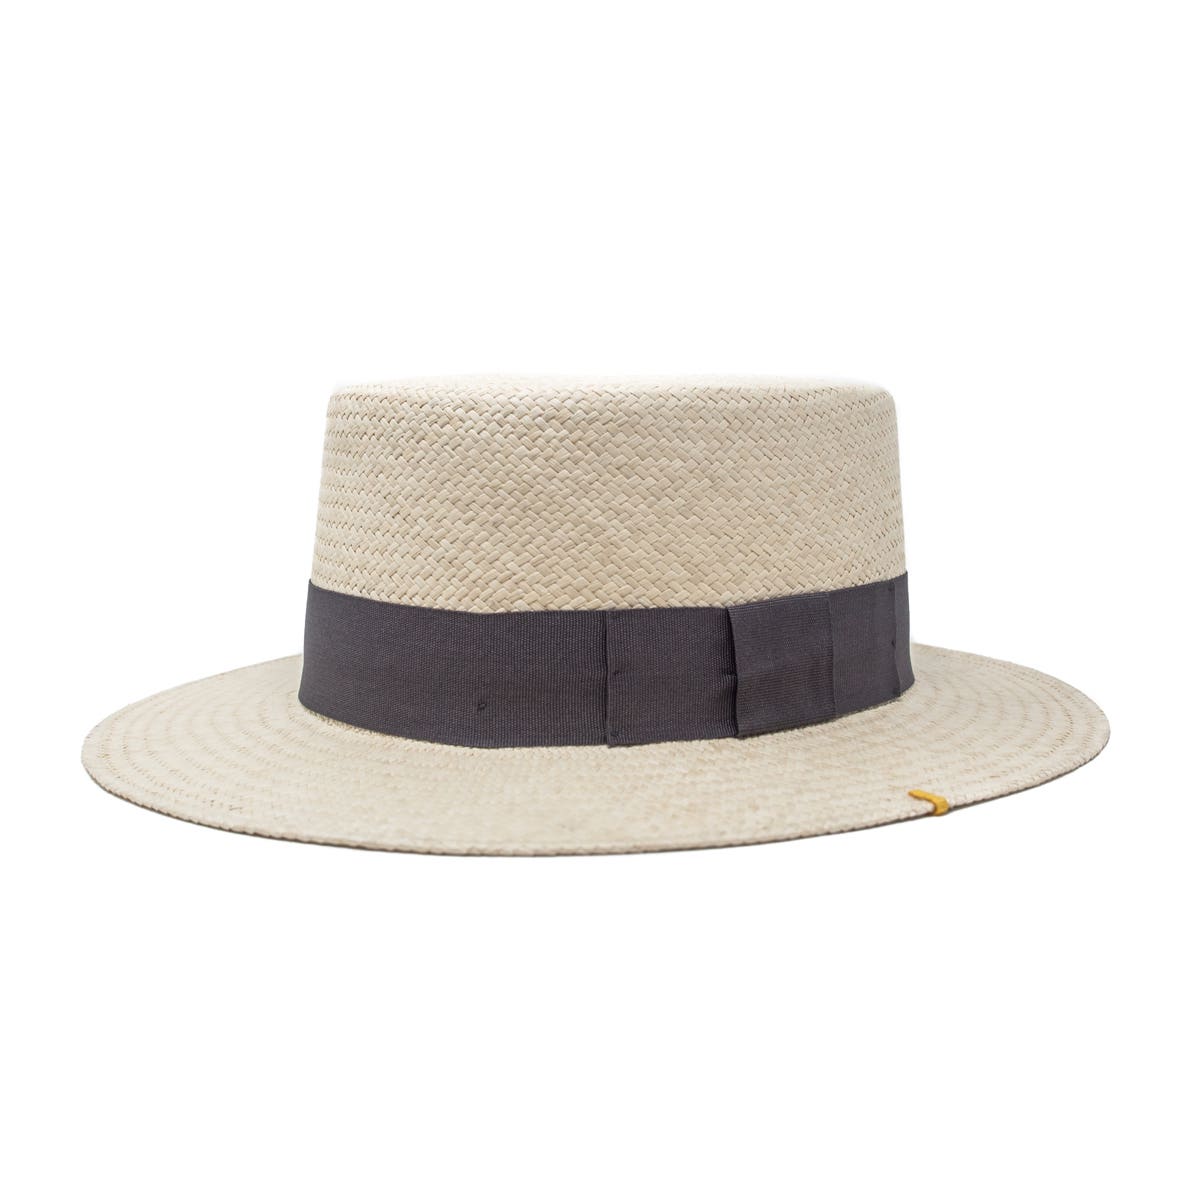 Quito Panama Boater Hat - Natural